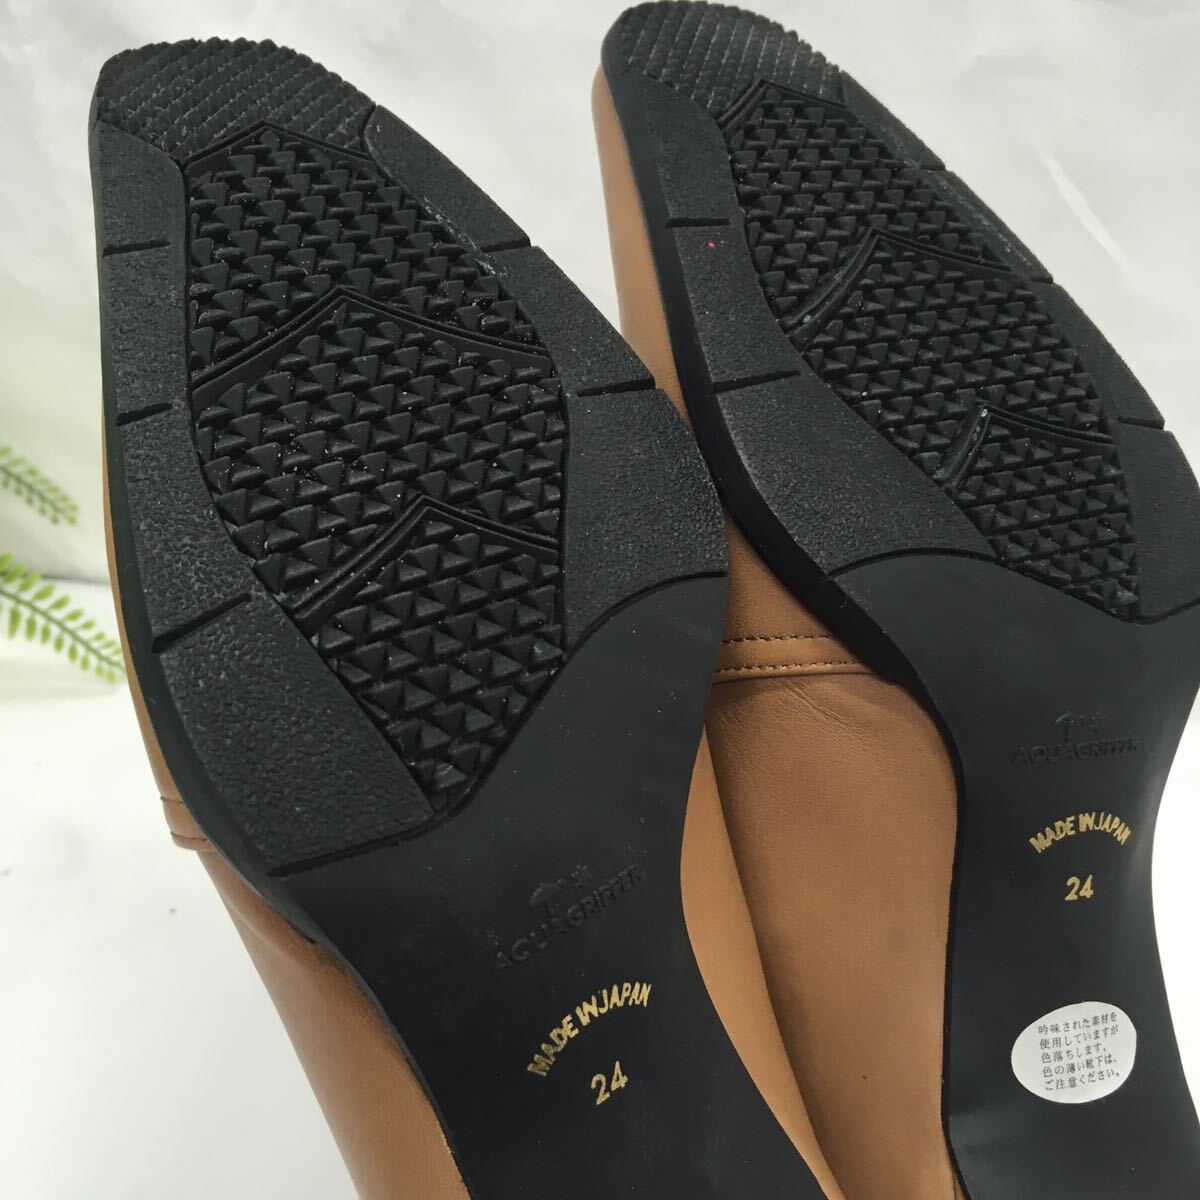 [442]mi Cima gong s leather square heel pumps beige size 24cm